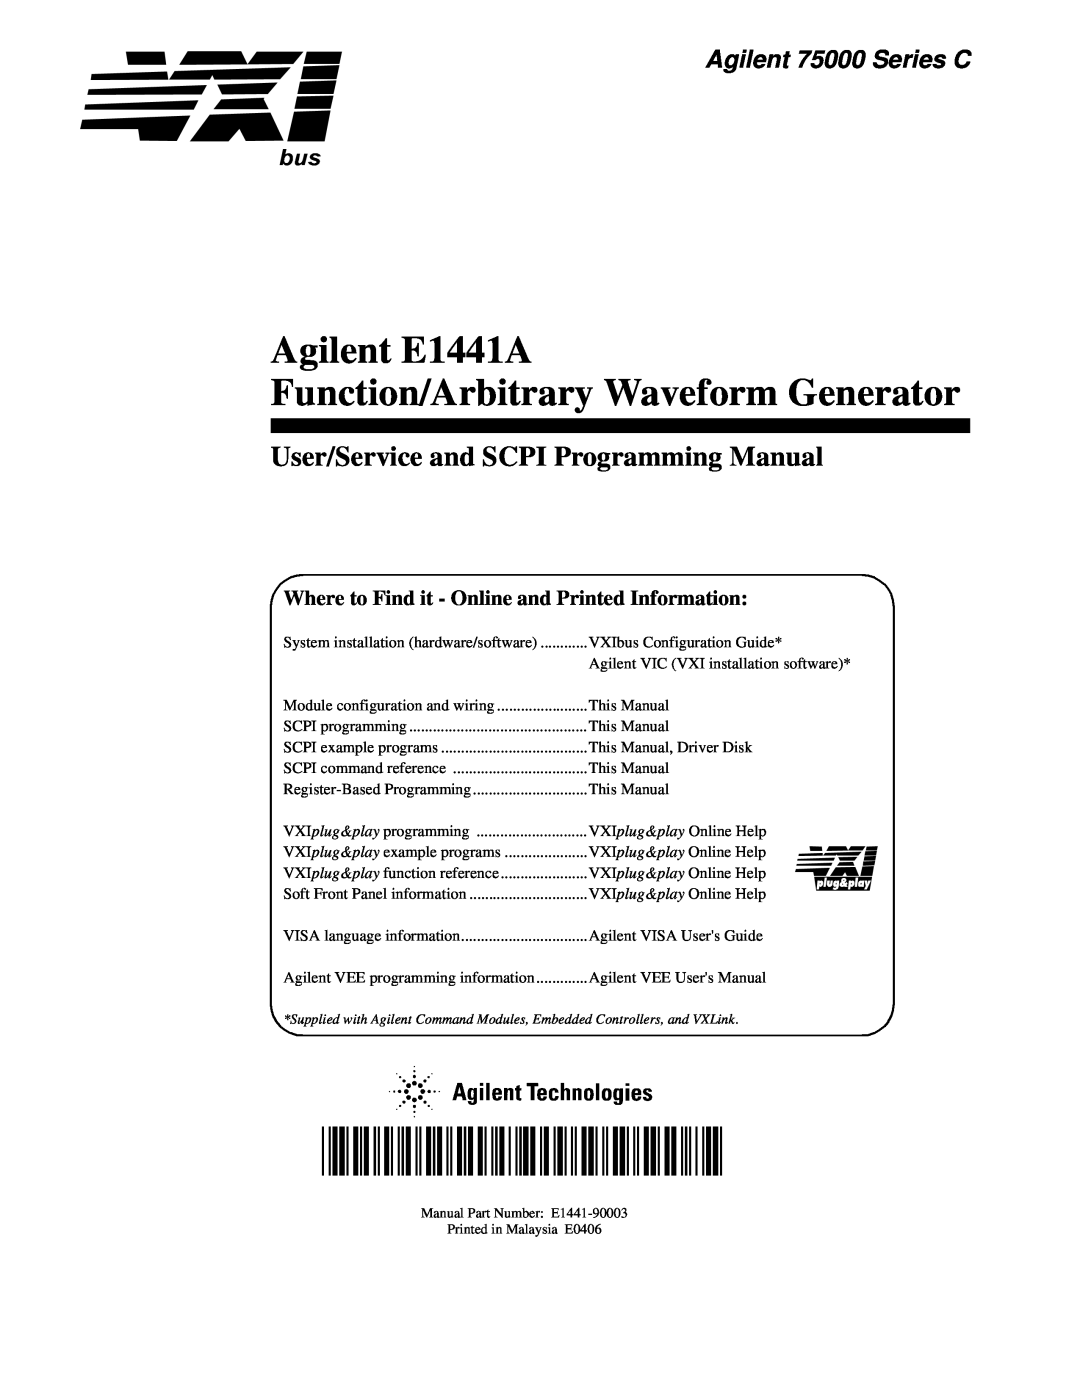 Agilent Technologies user service E1441-90003, Agilent E1441A, Function/Arbitrary Waveform Generator 